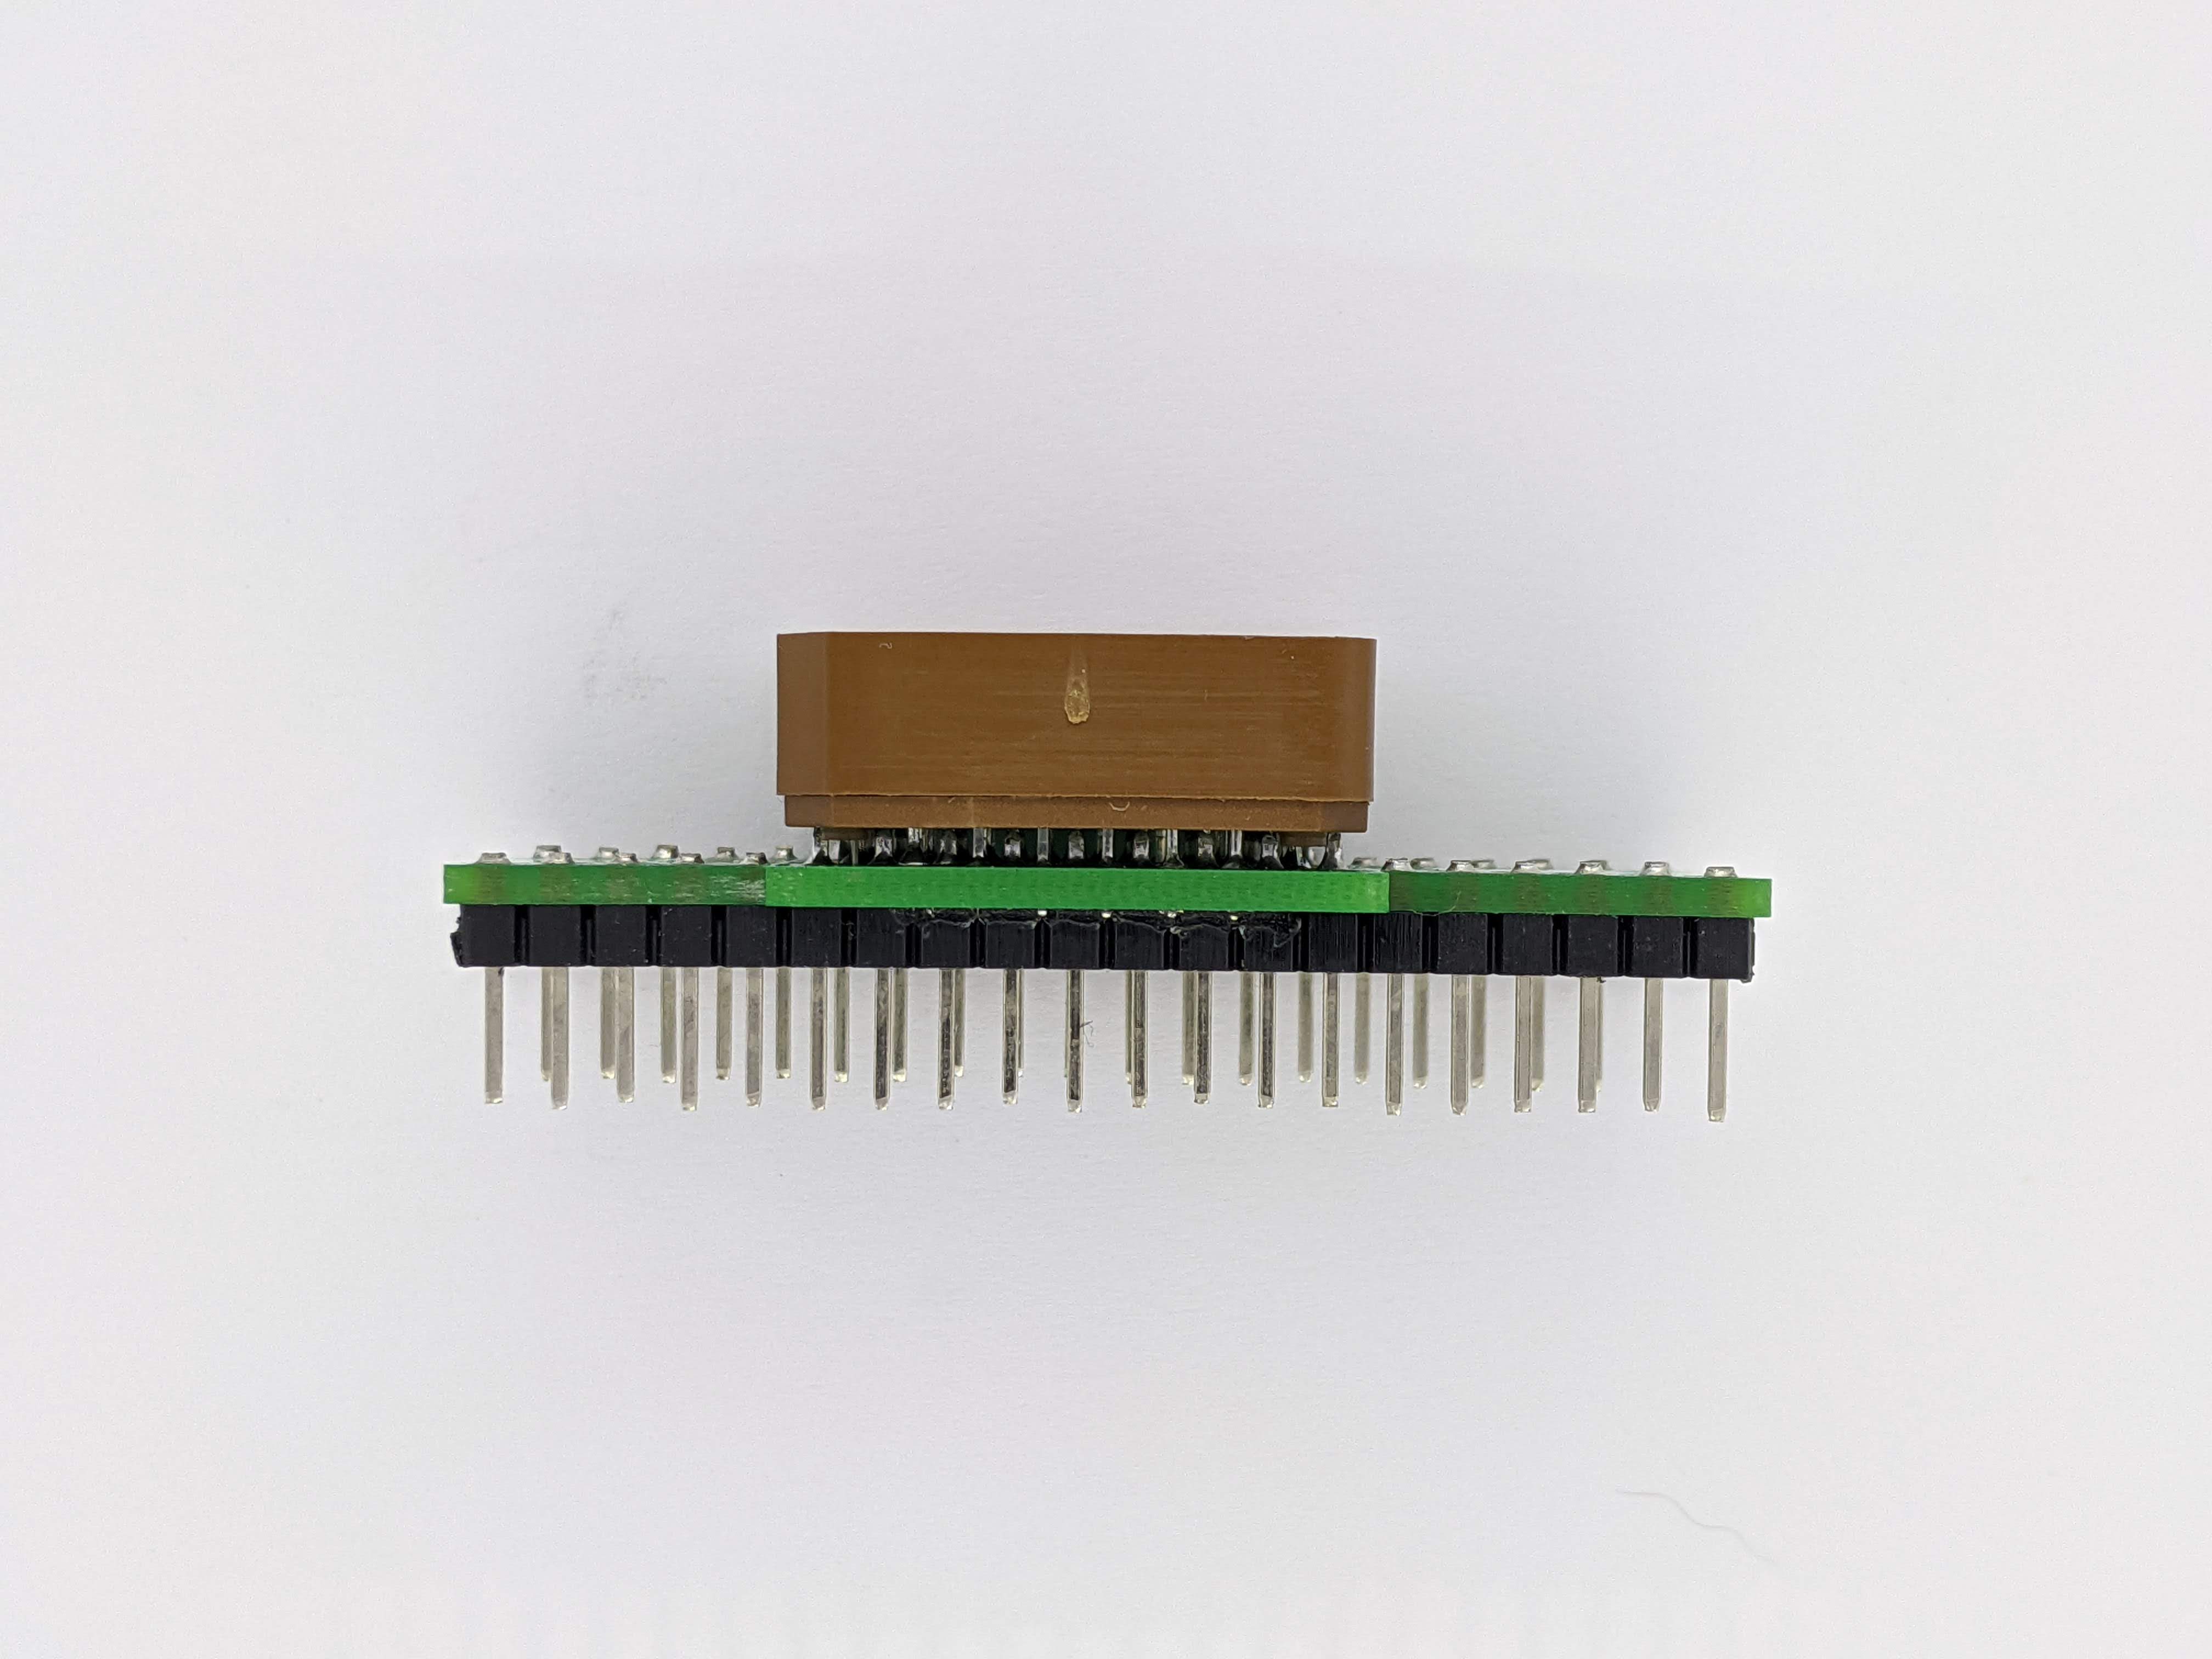 Z80 CPU PLCC44 to DIP40 adapter